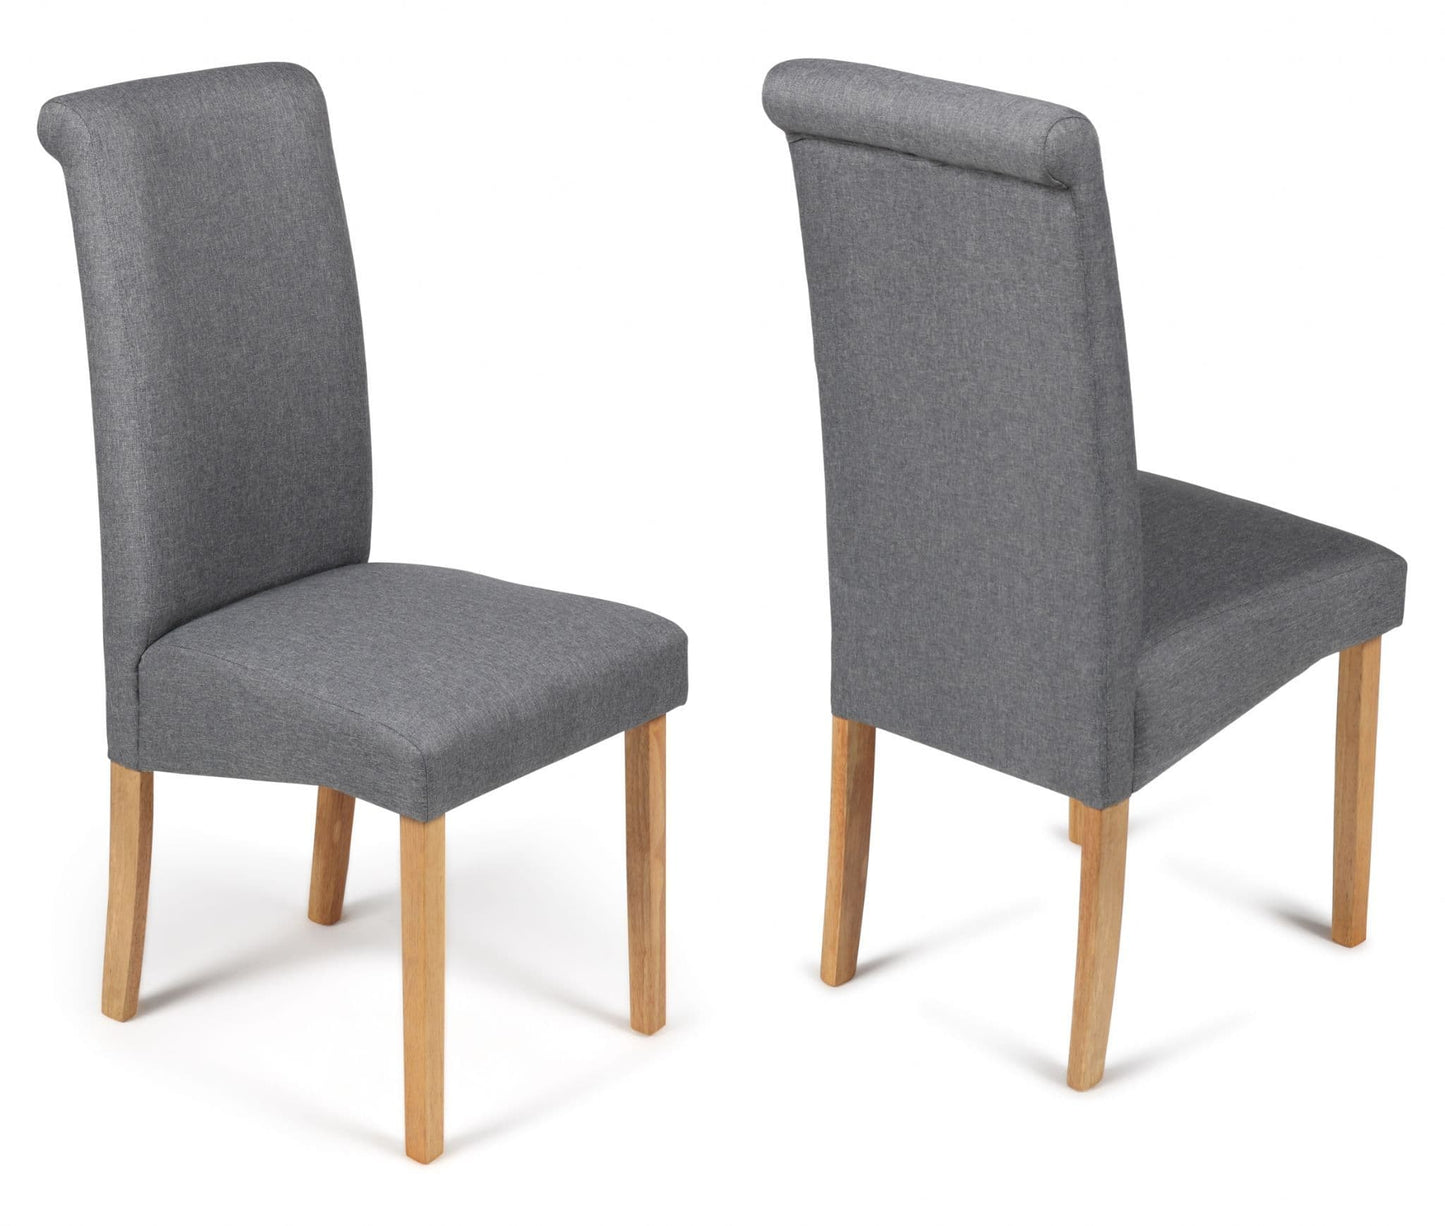 2 Roma Grey Fabric Dining Chairs - SKU AB-ROMA-FAB-GR2 – EAN 0703694050619